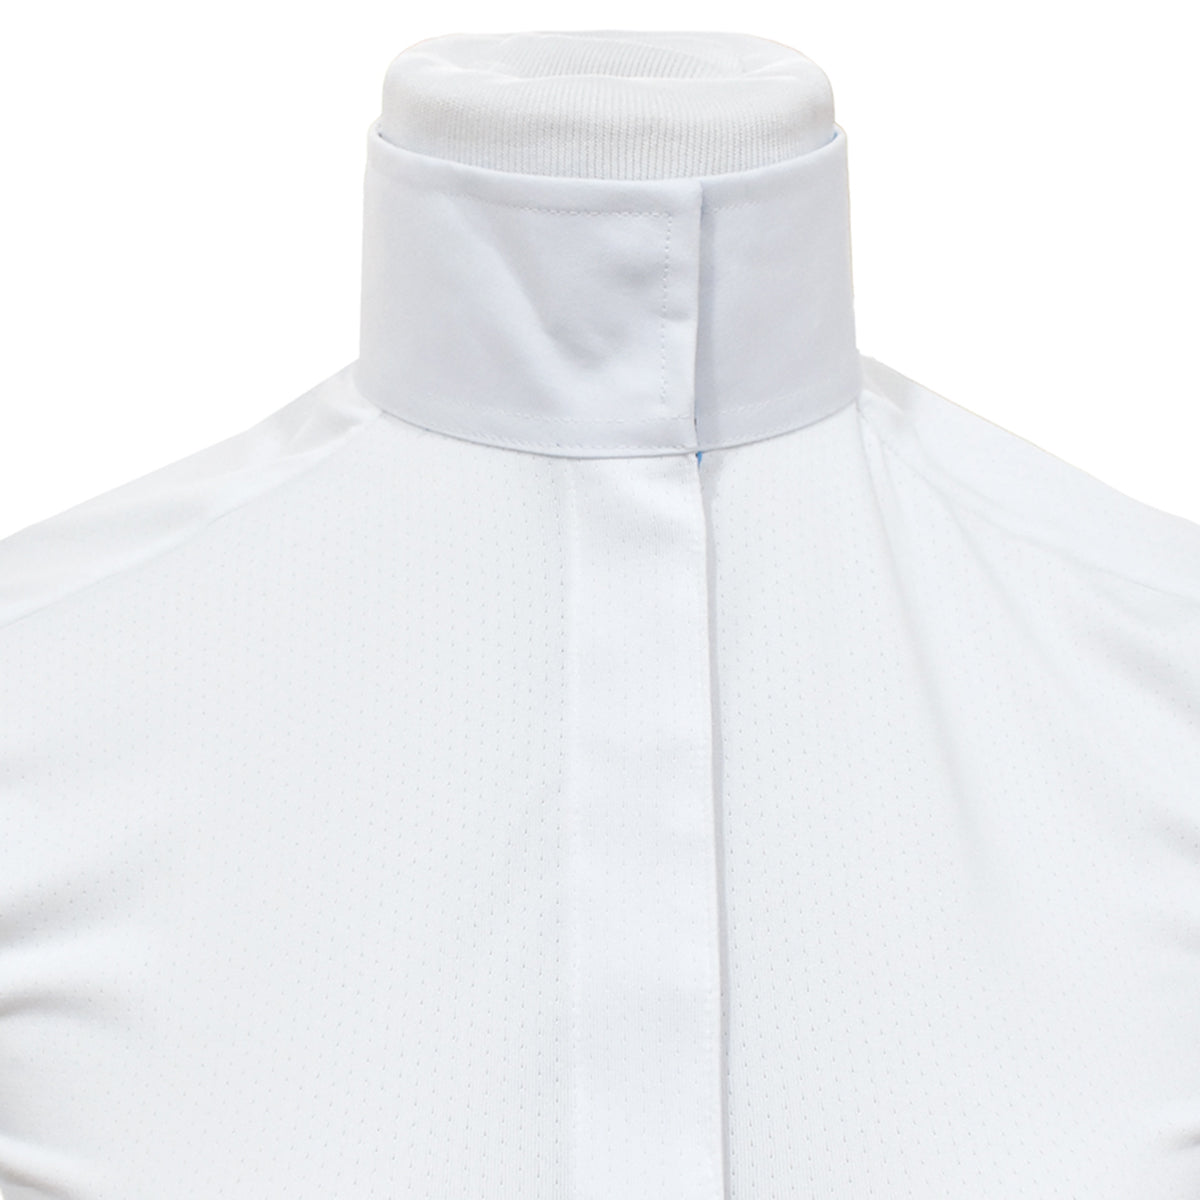 Essex Classics Ladies "Looking Back" Talent Yarn Straight Collar Short Sleeve Show Shirt